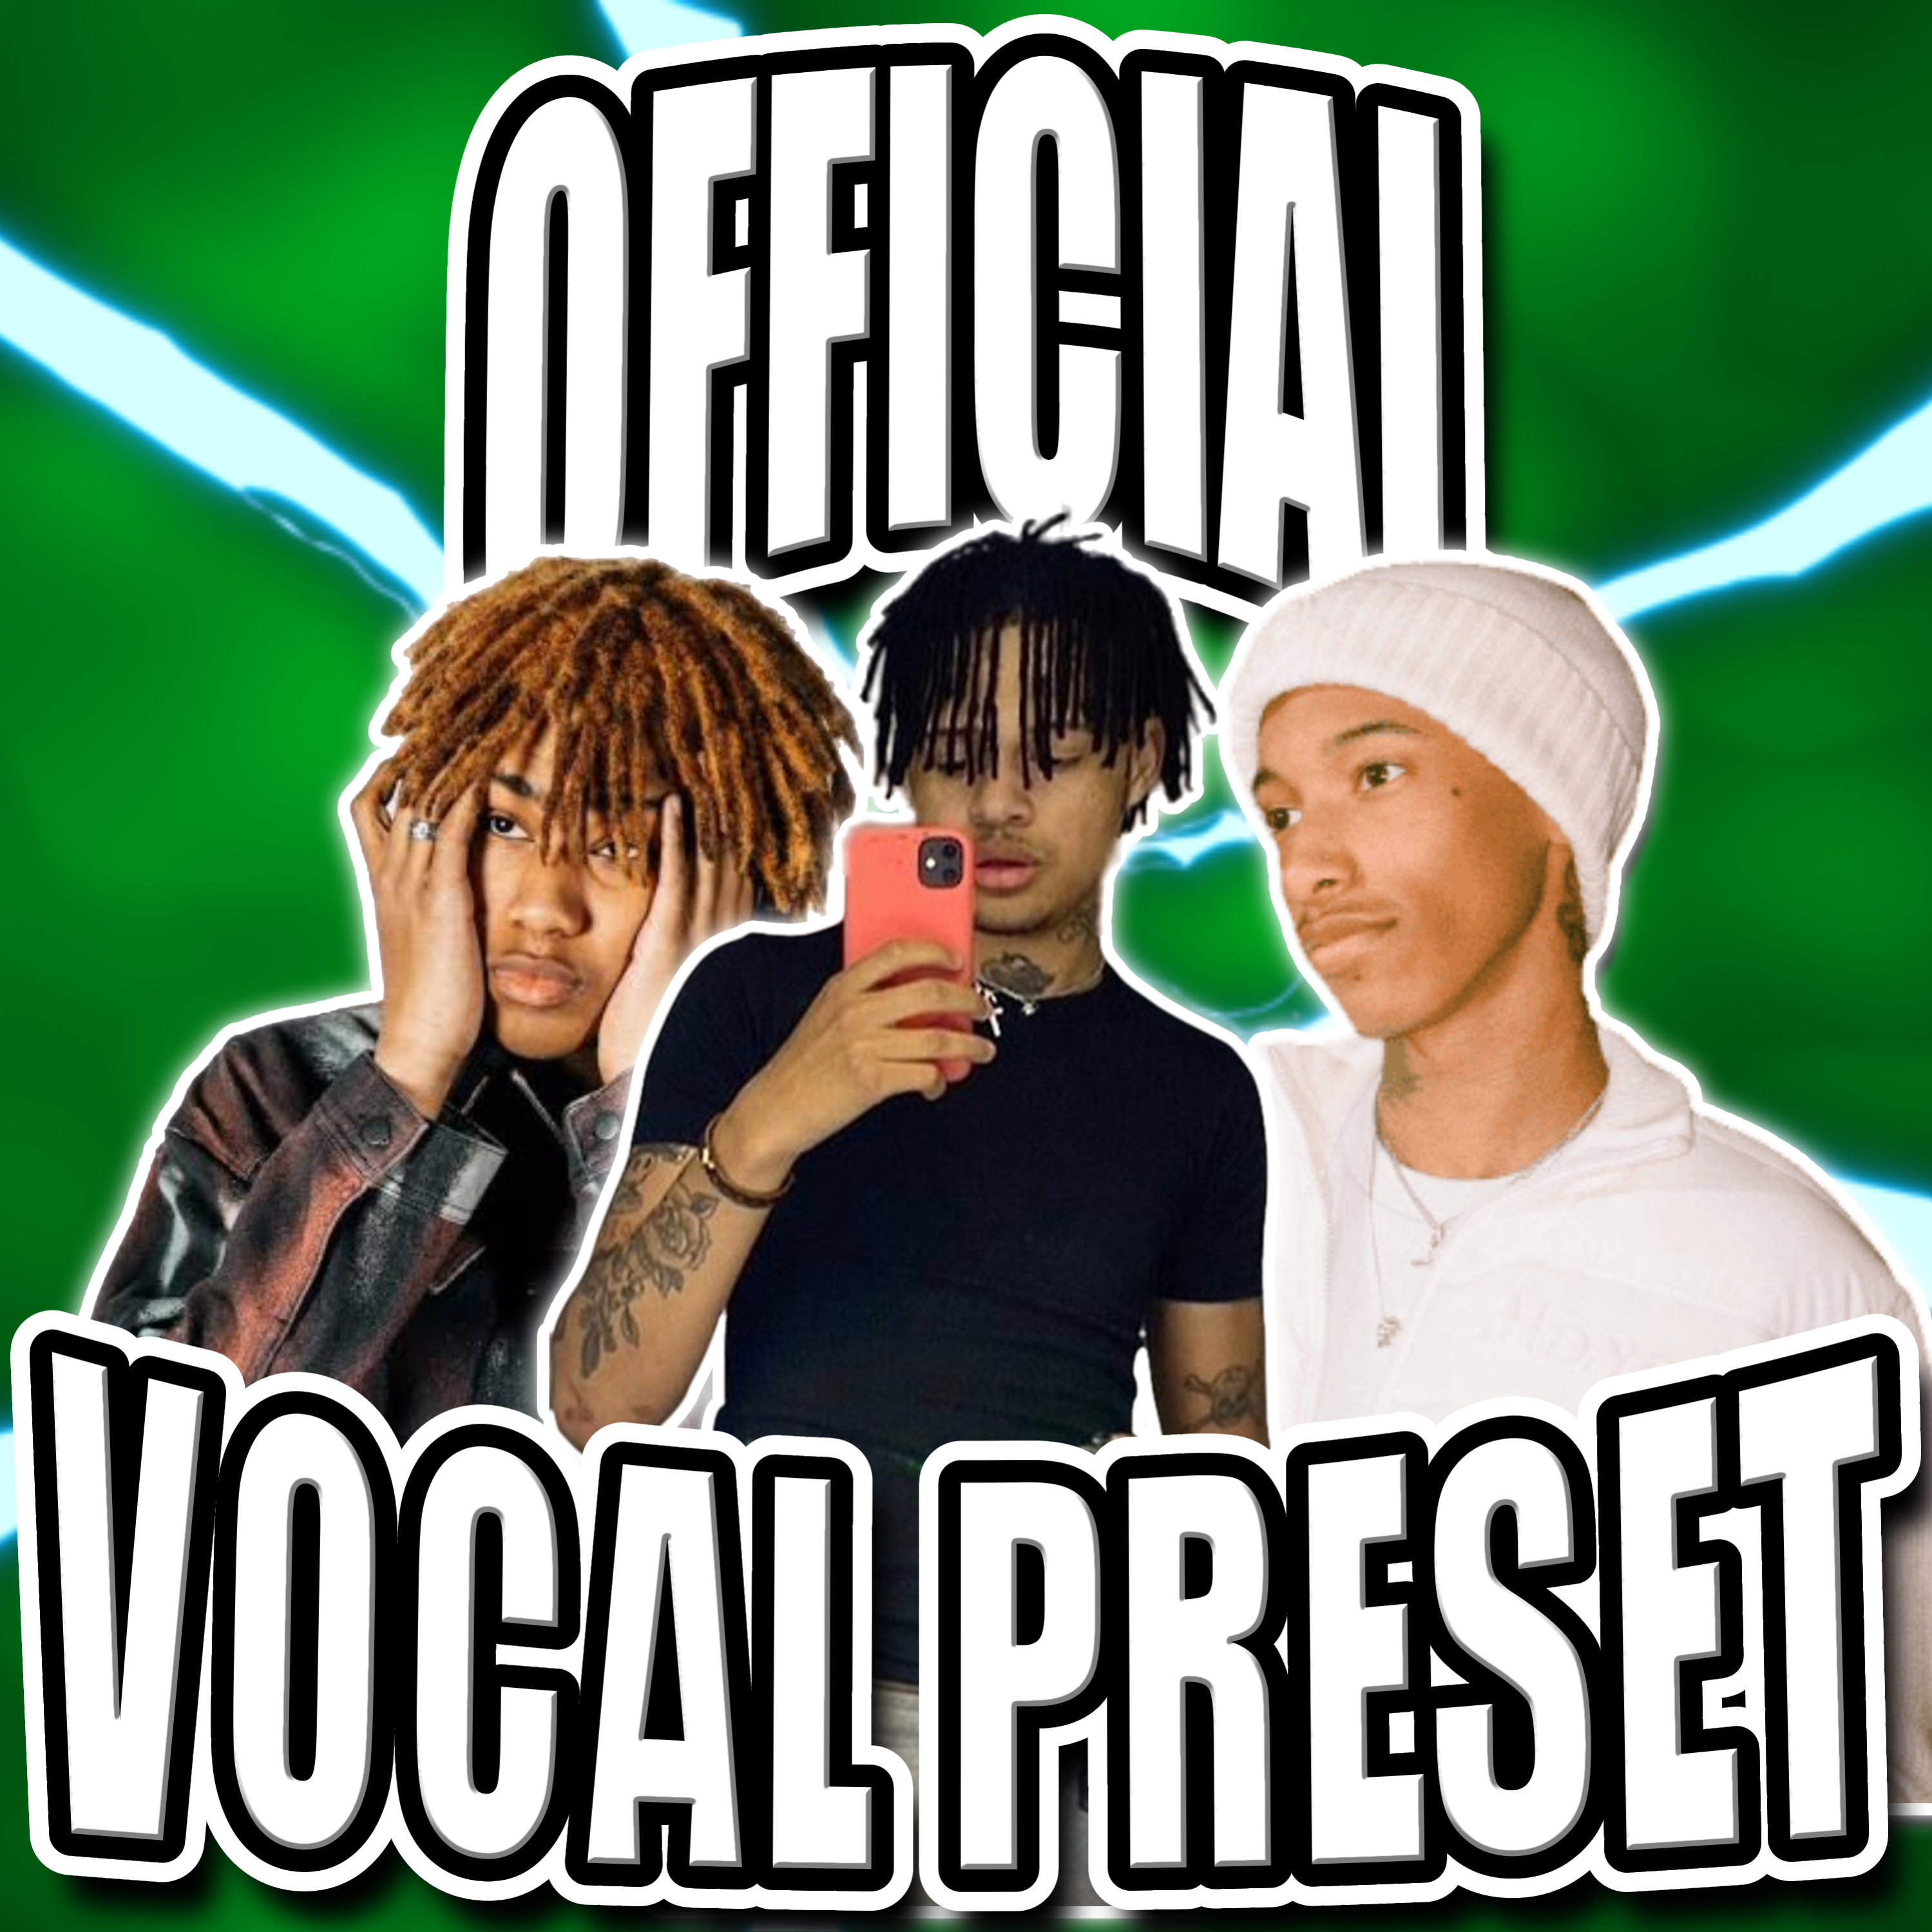 The Official Vocal Presets Bundle